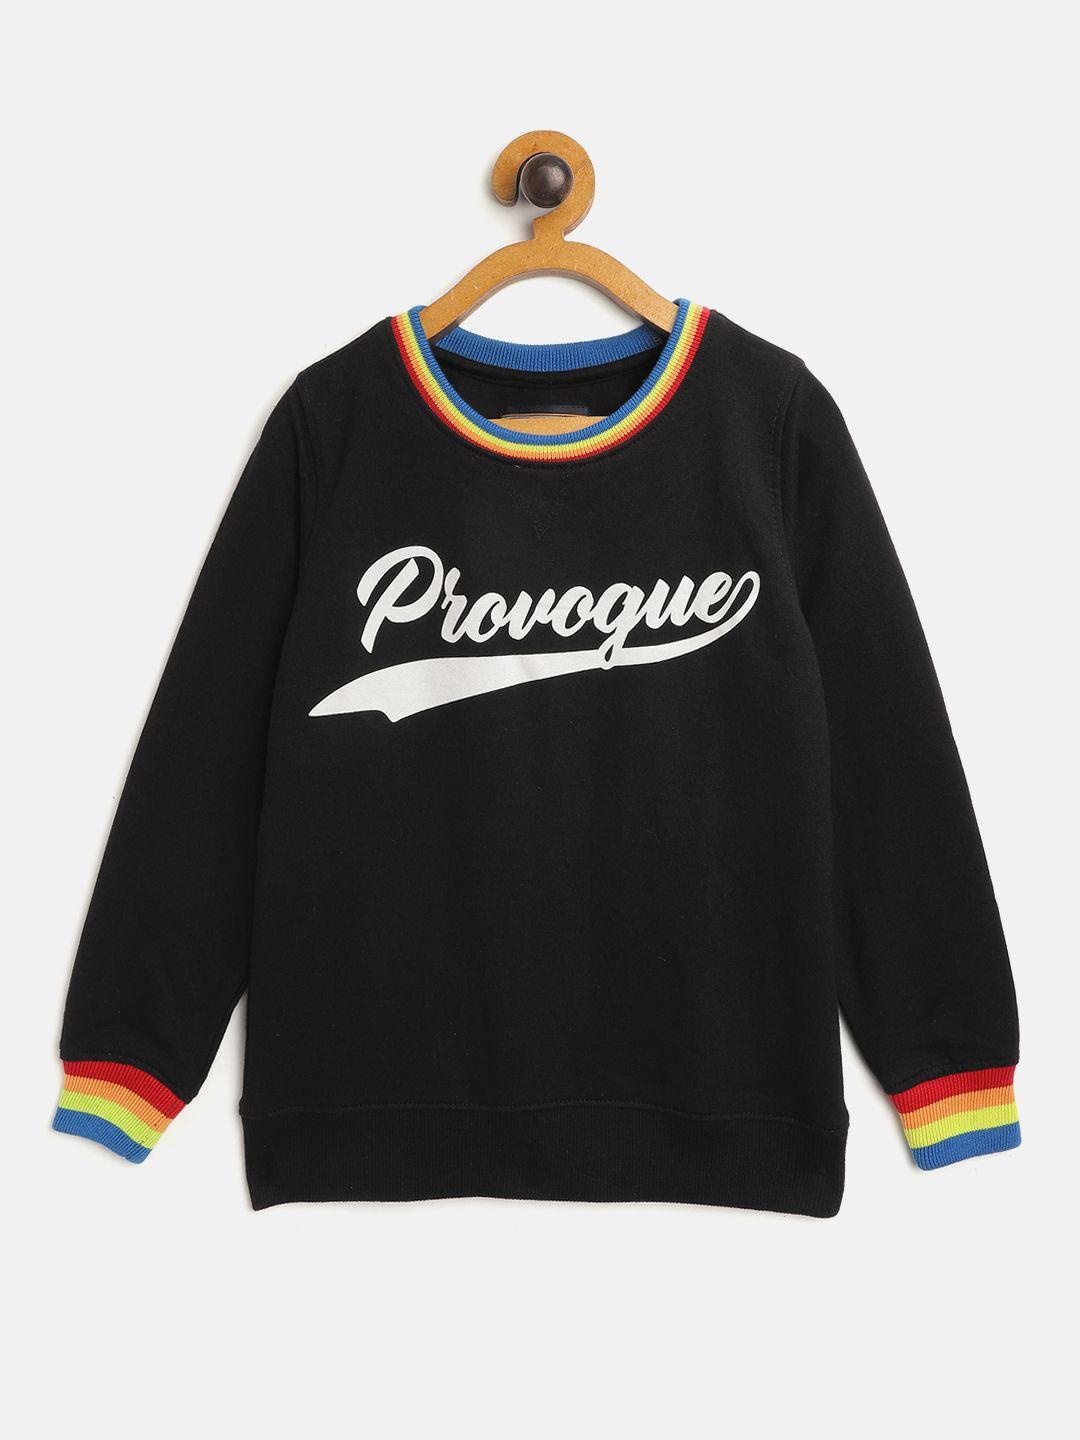 provogue-boys-black-&-white-brand-logo-print-sweatshirt